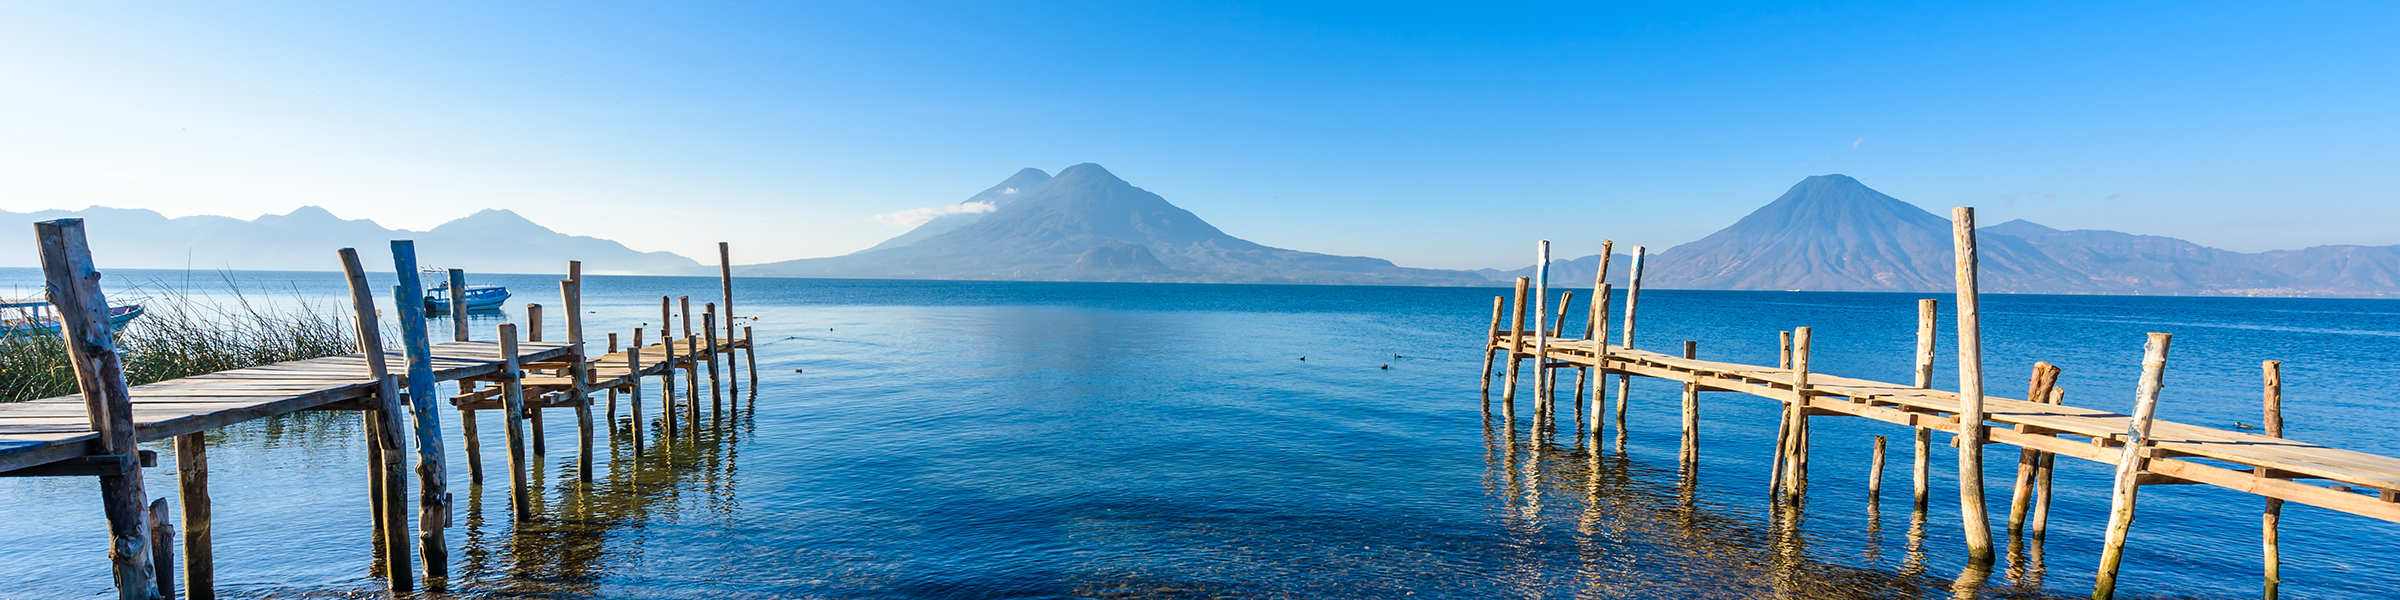 Guatemala Lake Atitlán